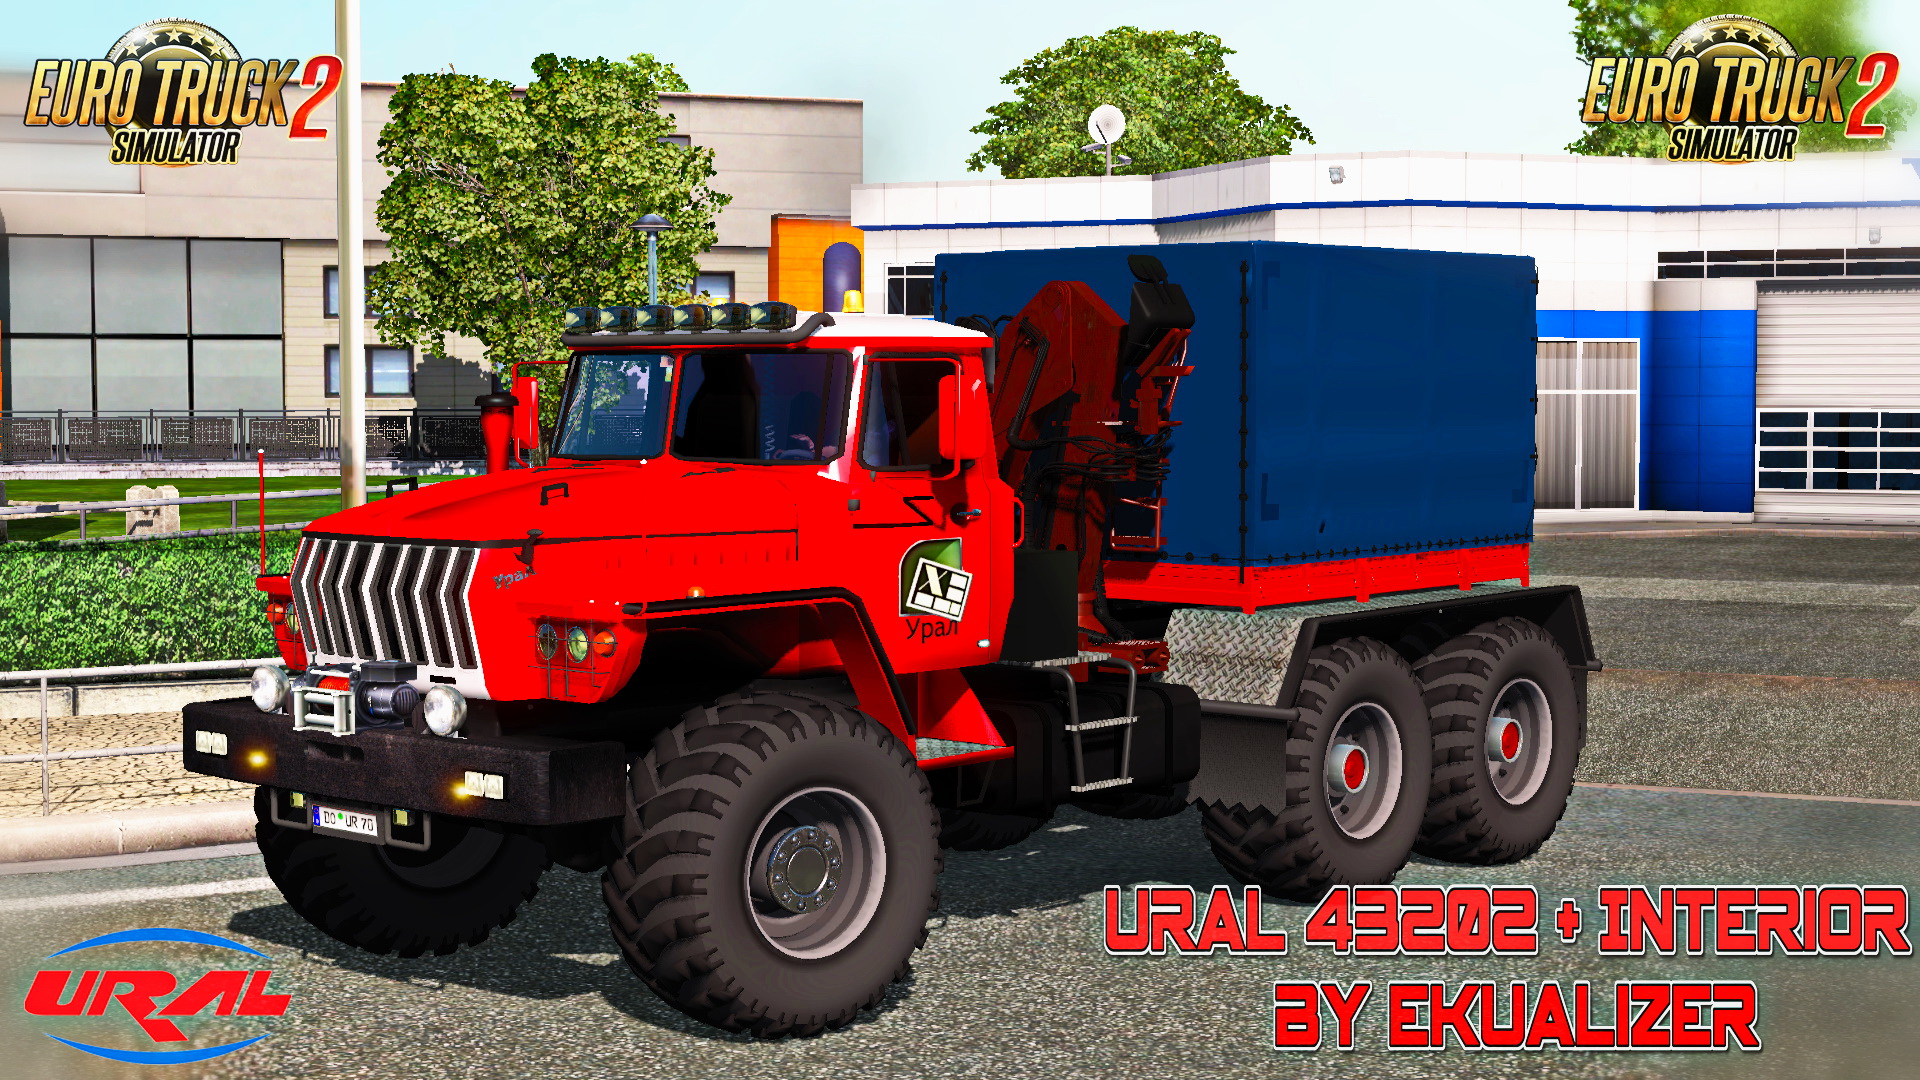 Ural 43202 + Interior + Polar Transport Cargo v3.4 by Ekualizer (1.24.x) for ETS 2